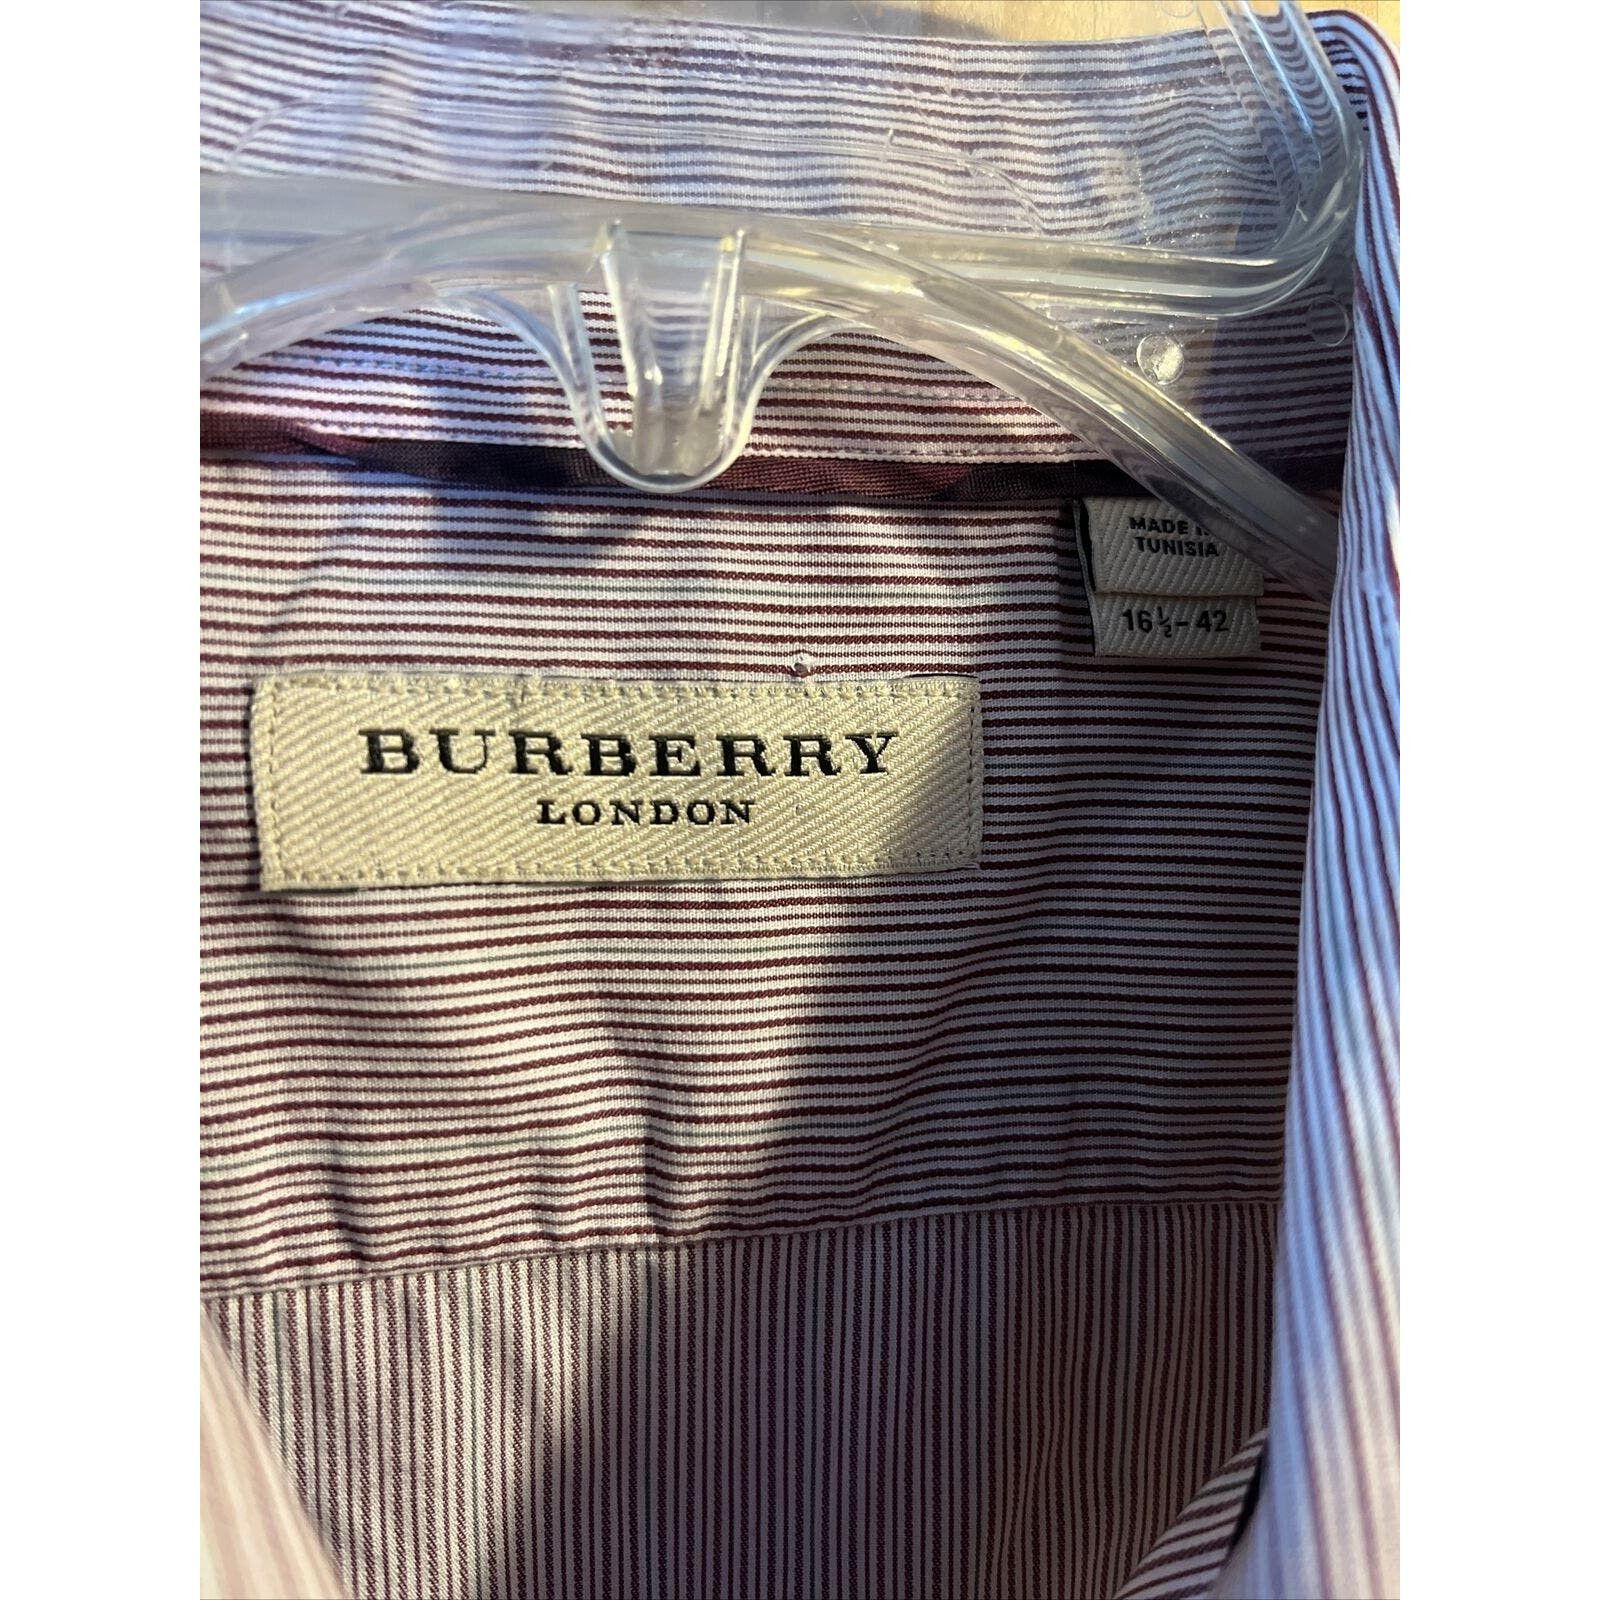 Burberry Burberry London Men’s 16.5 42 Red Striped LS Cotton Shirt Size US L / EU 52-54 / 3 - 2 Preview